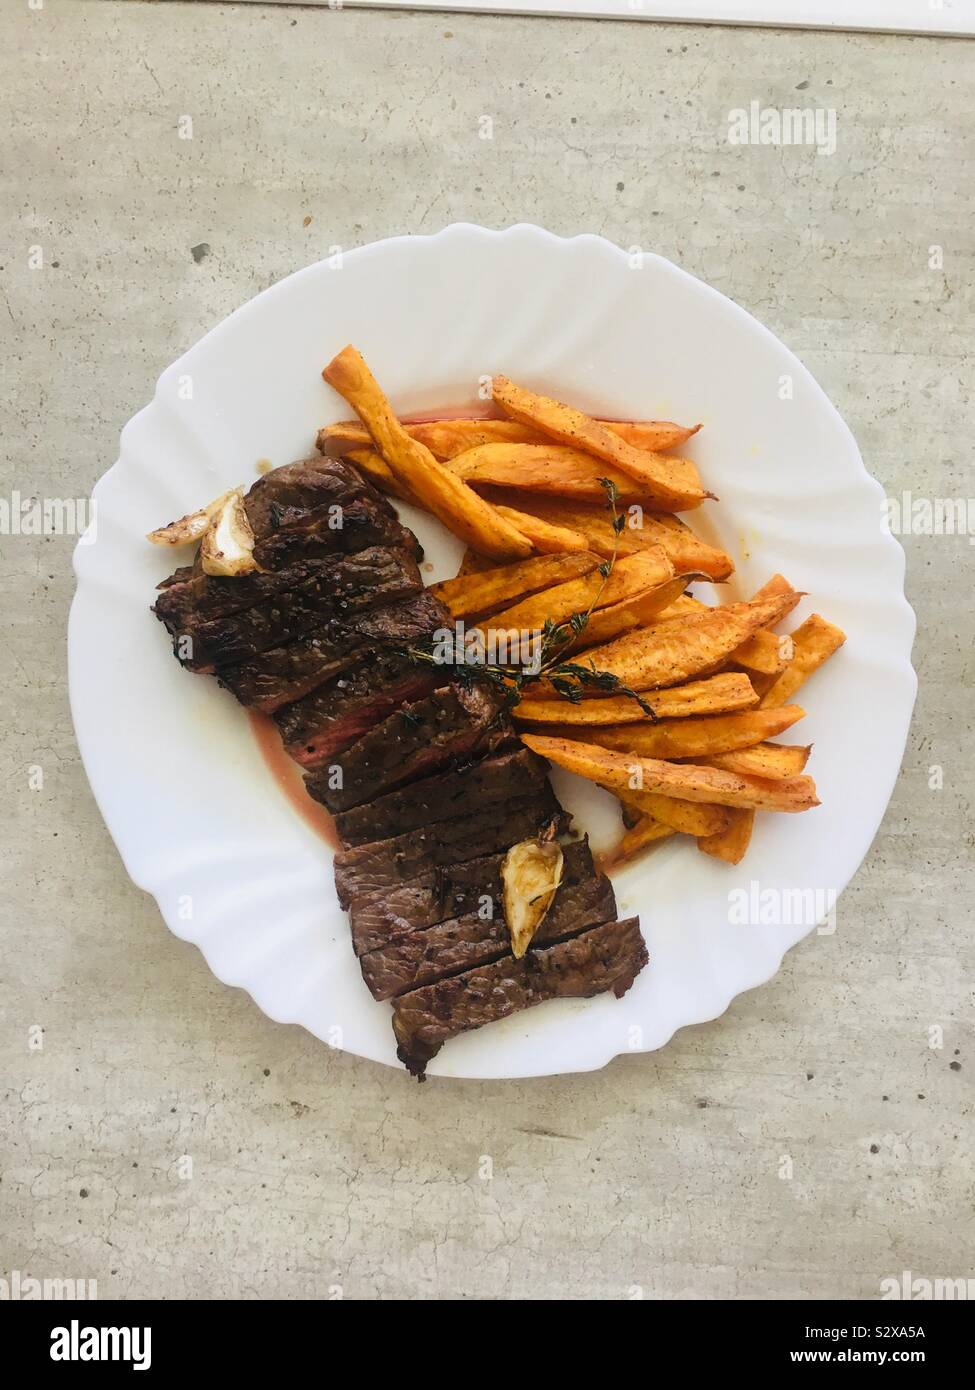 Steak with sweet potato fries Stock Photo - Alamy